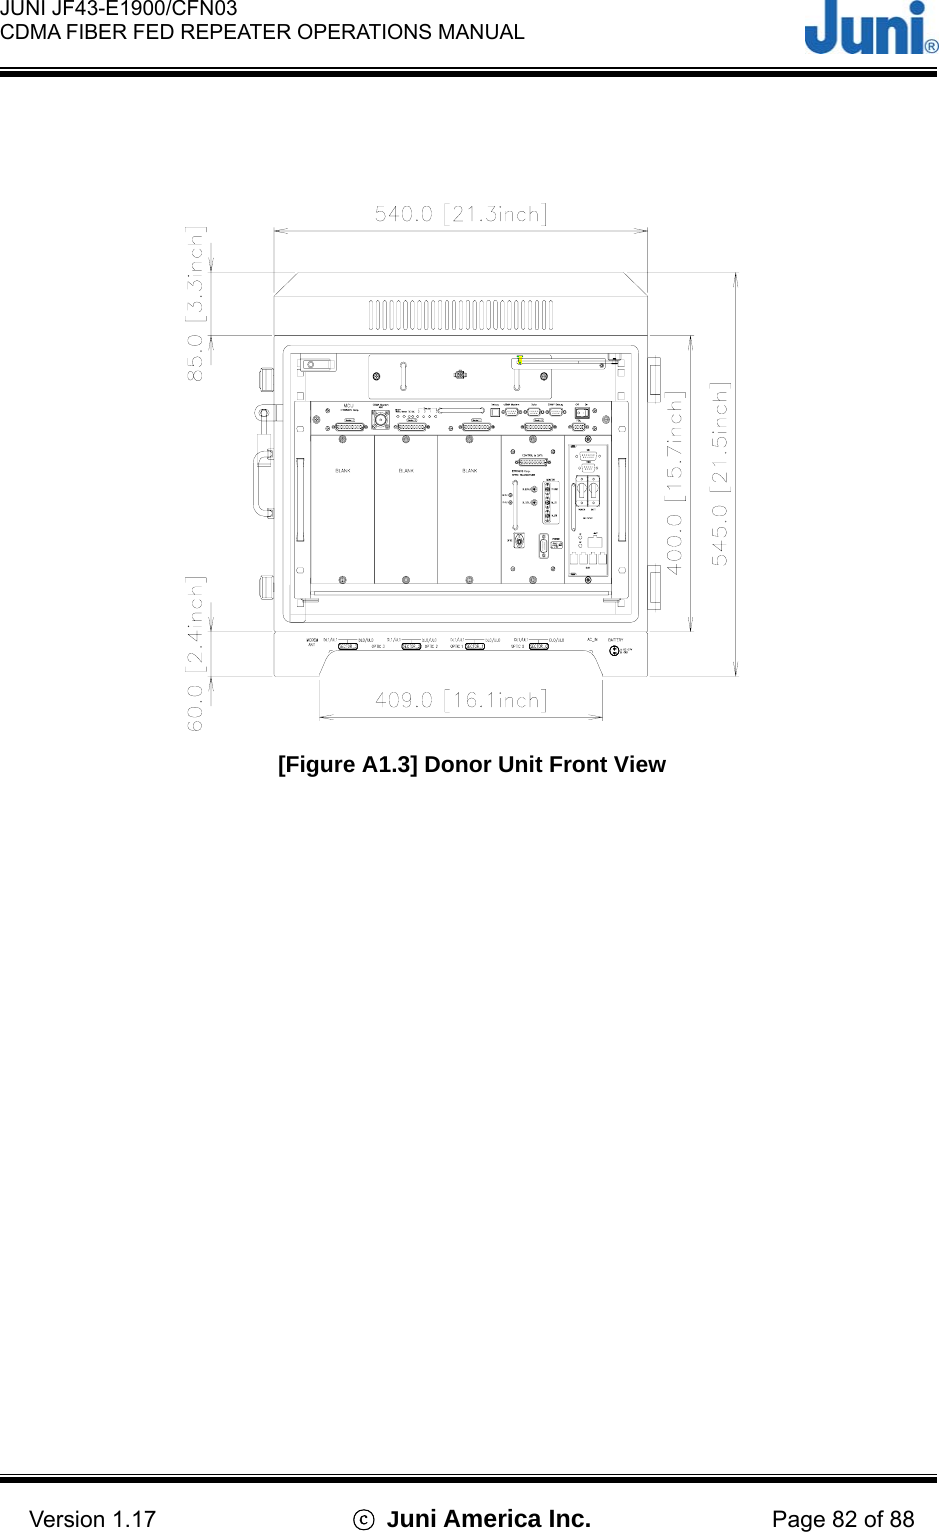  JUNI JF43-E1900/CFN03 CDMA FIBER FED REPEATER OPERATIONS MANUAL                                    Version 1.17  ⓒ Juni America Inc. Page 82 of 88   [Figure A1.3] Donor Unit Front View  